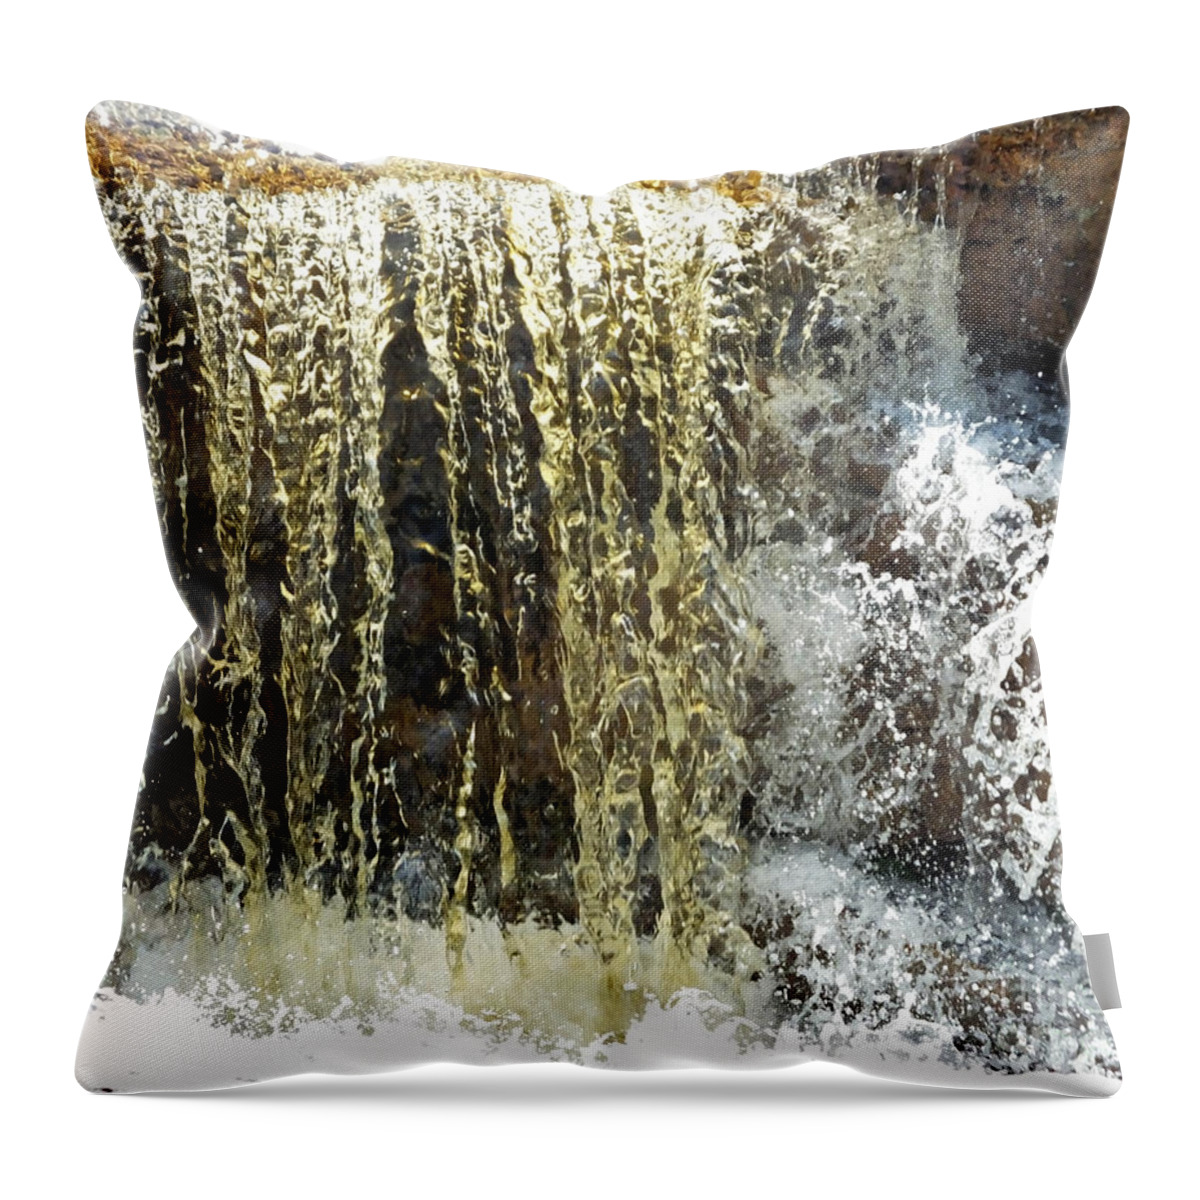 Waterfall Throw Pillow featuring the photograph Swift River Falls Nh by Lizi Beard-Ward